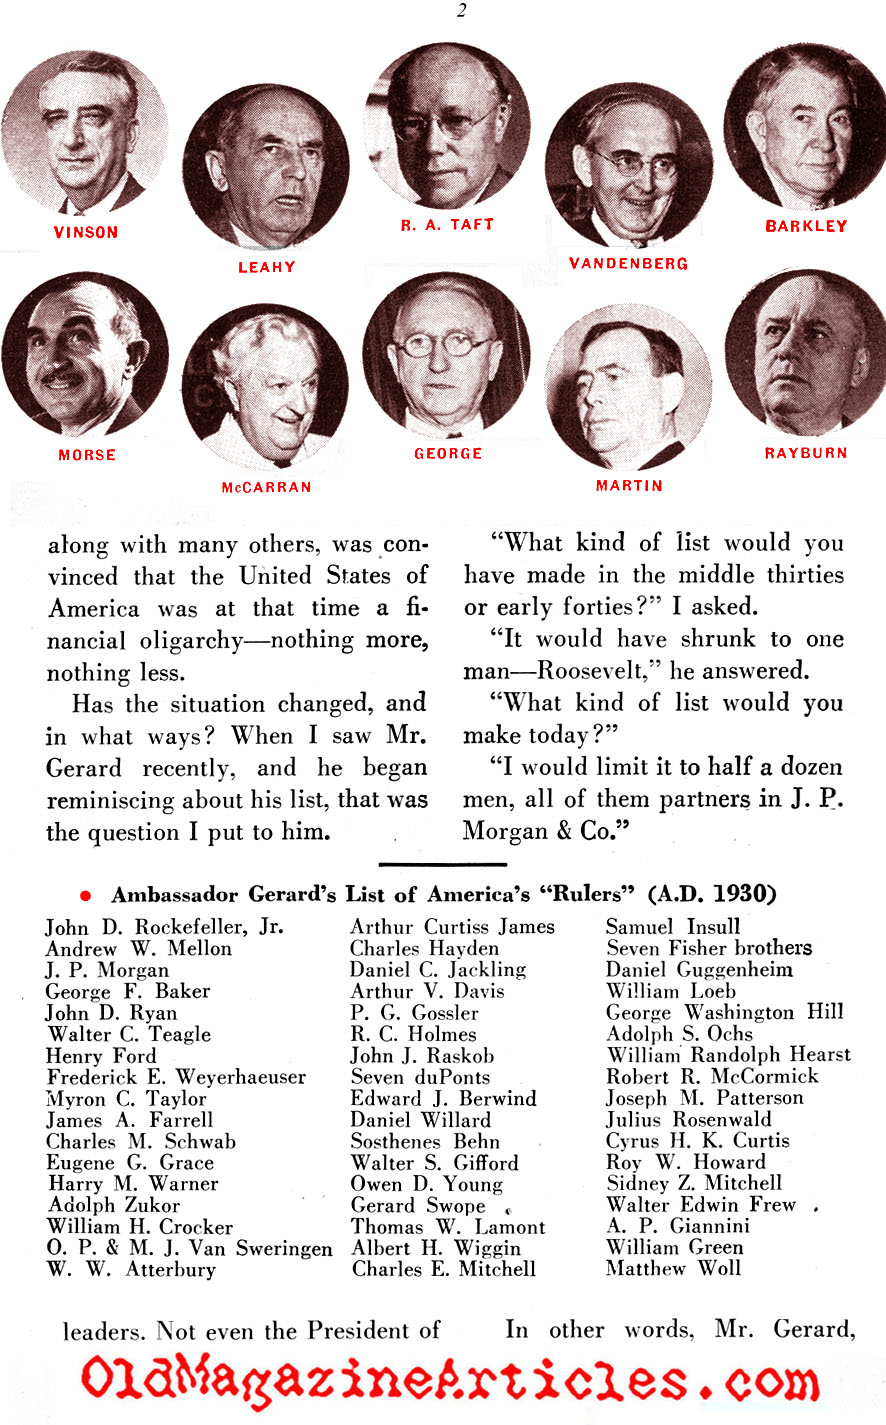 The Most Powerfull Men in Cold War Washington ('47 Magazine)